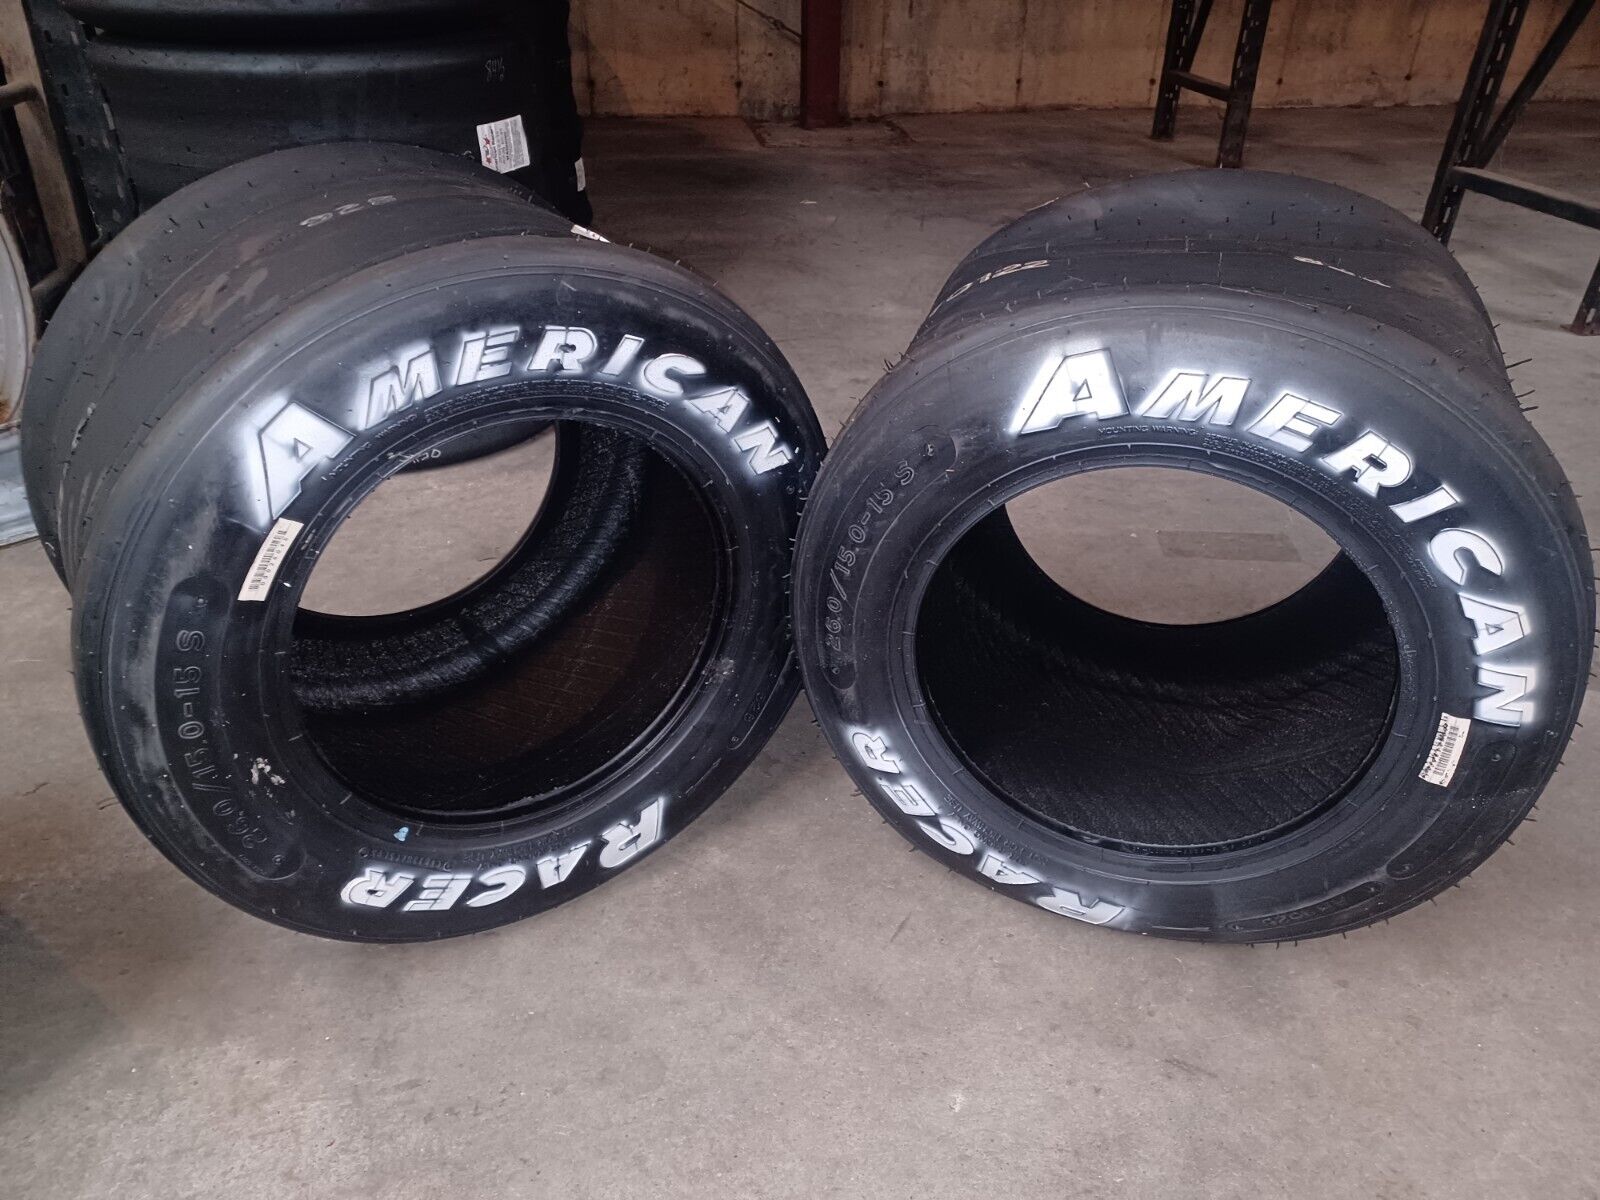  American Racer Tires